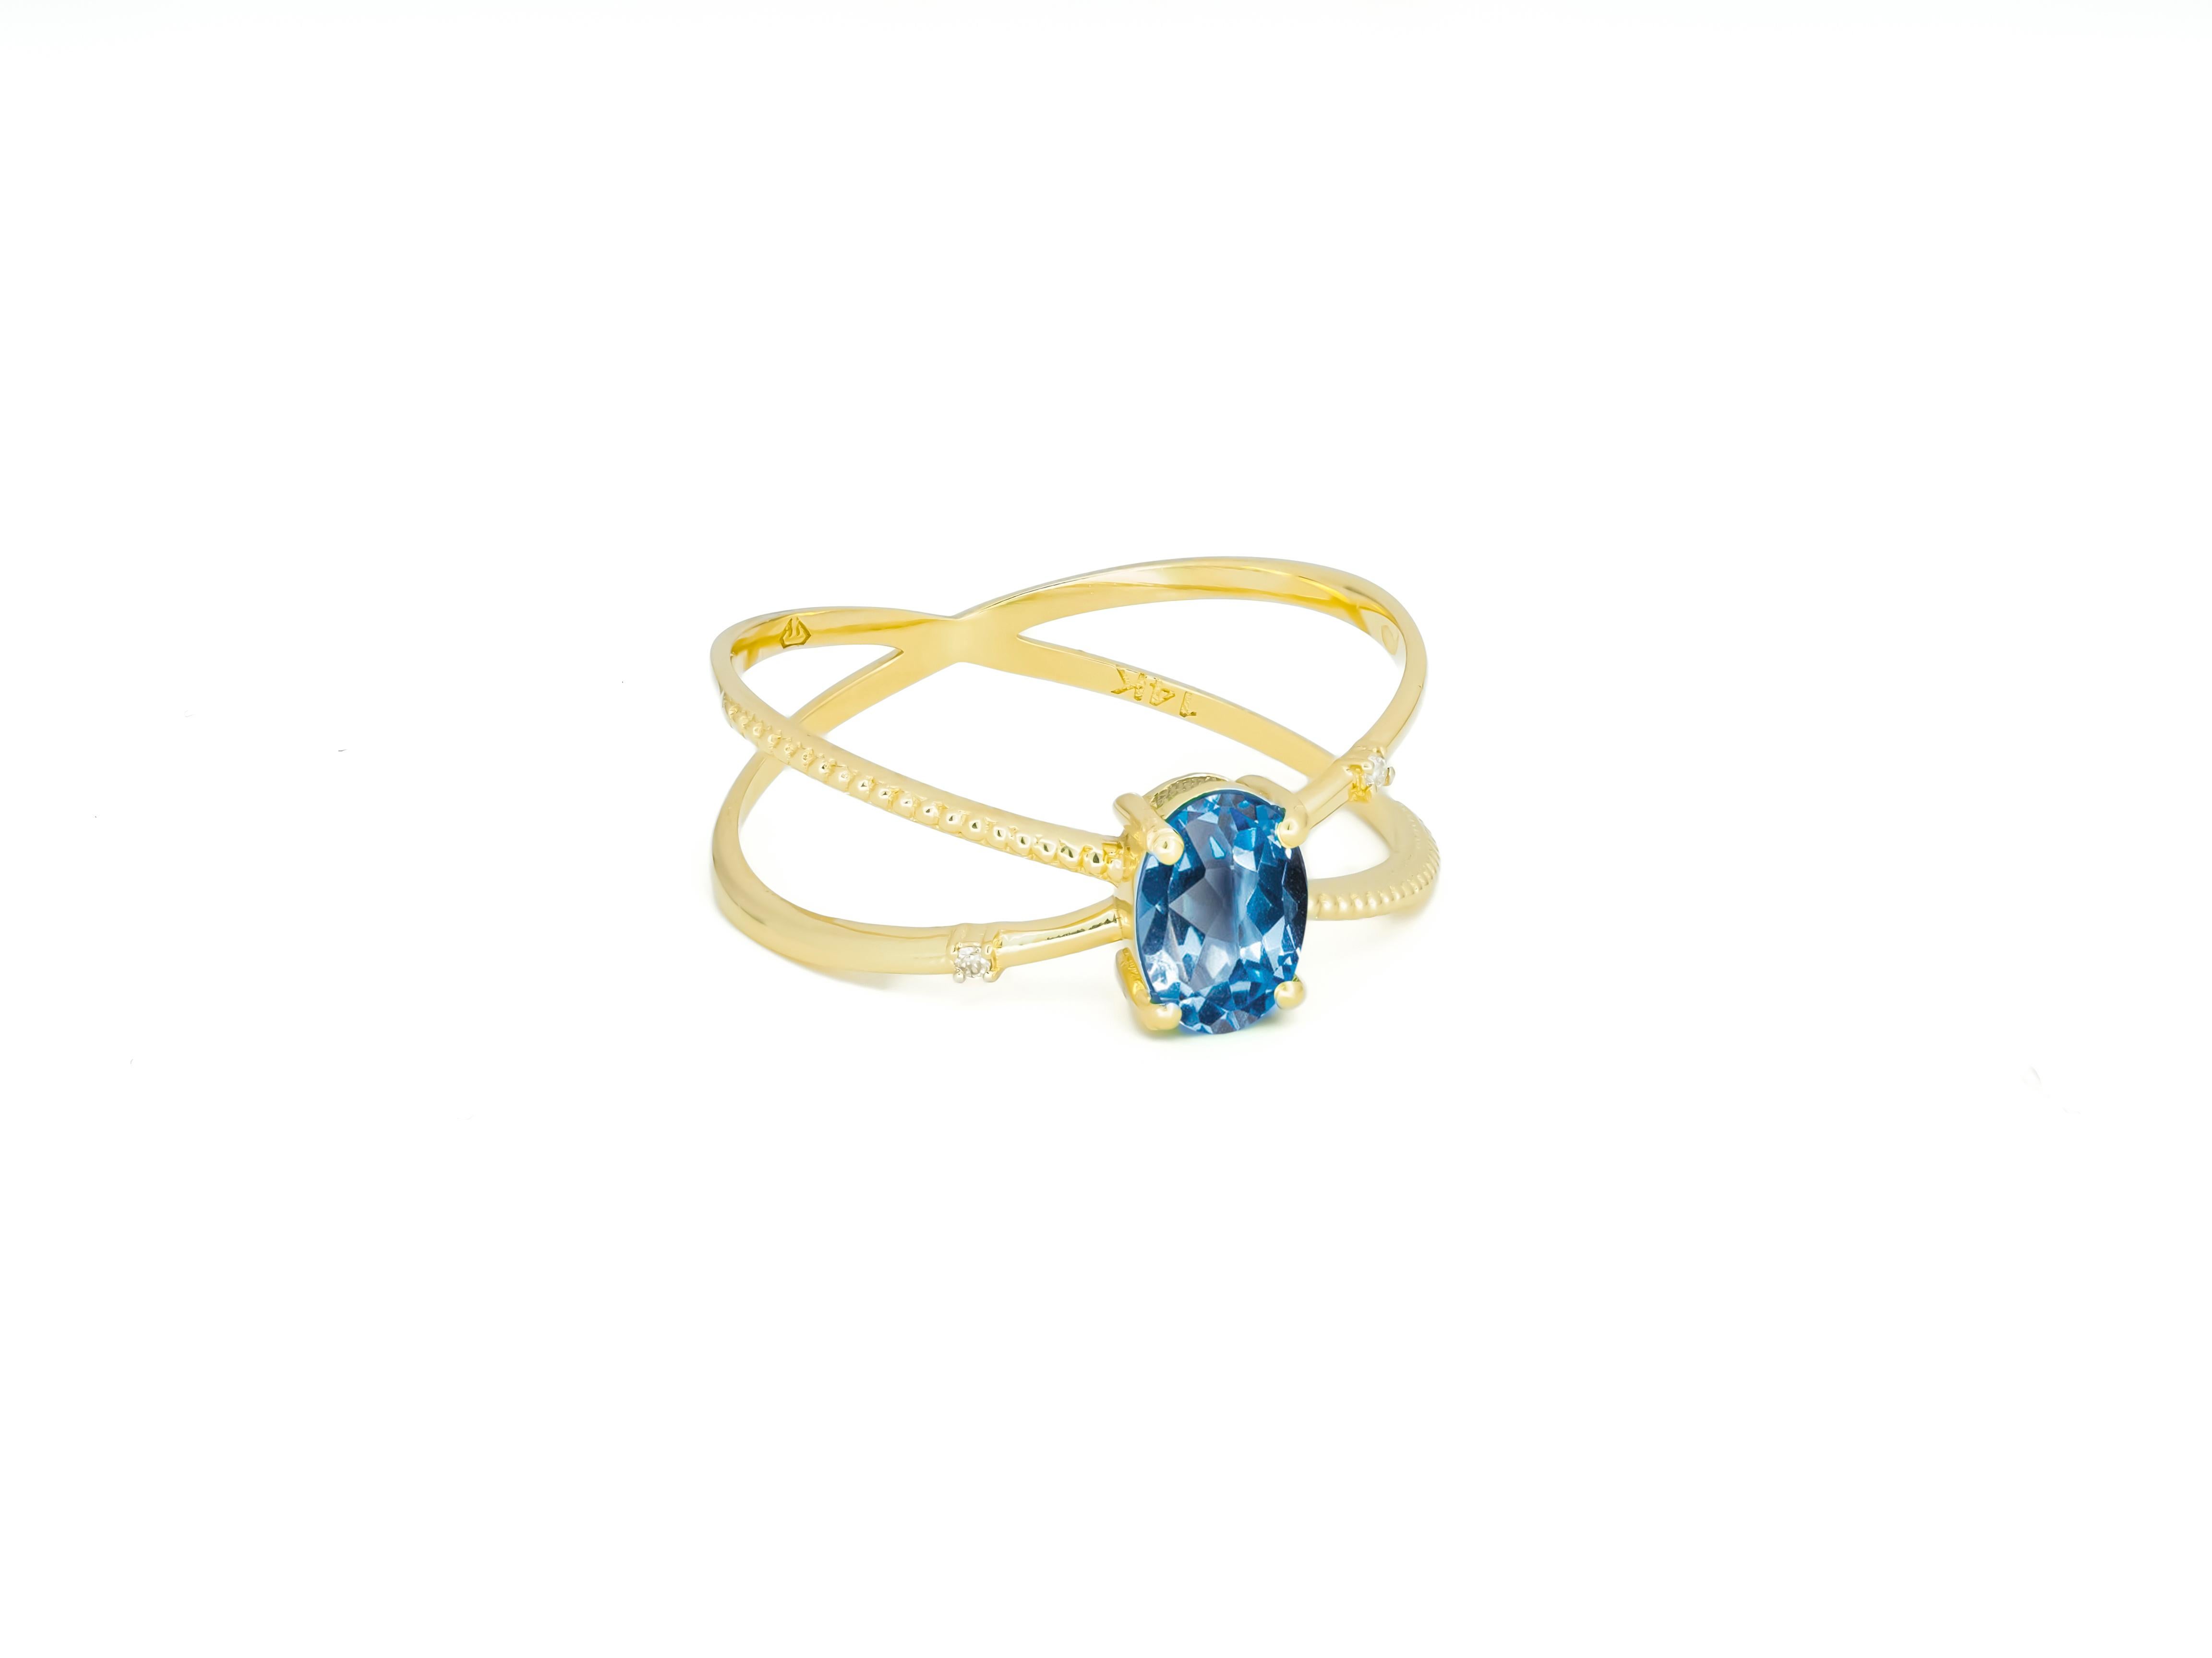 Modern Topaz Spiral Ring, Oval Topaz Ring, Topaz Gold Ring, 14k Gold Ring with Topaz For Sale